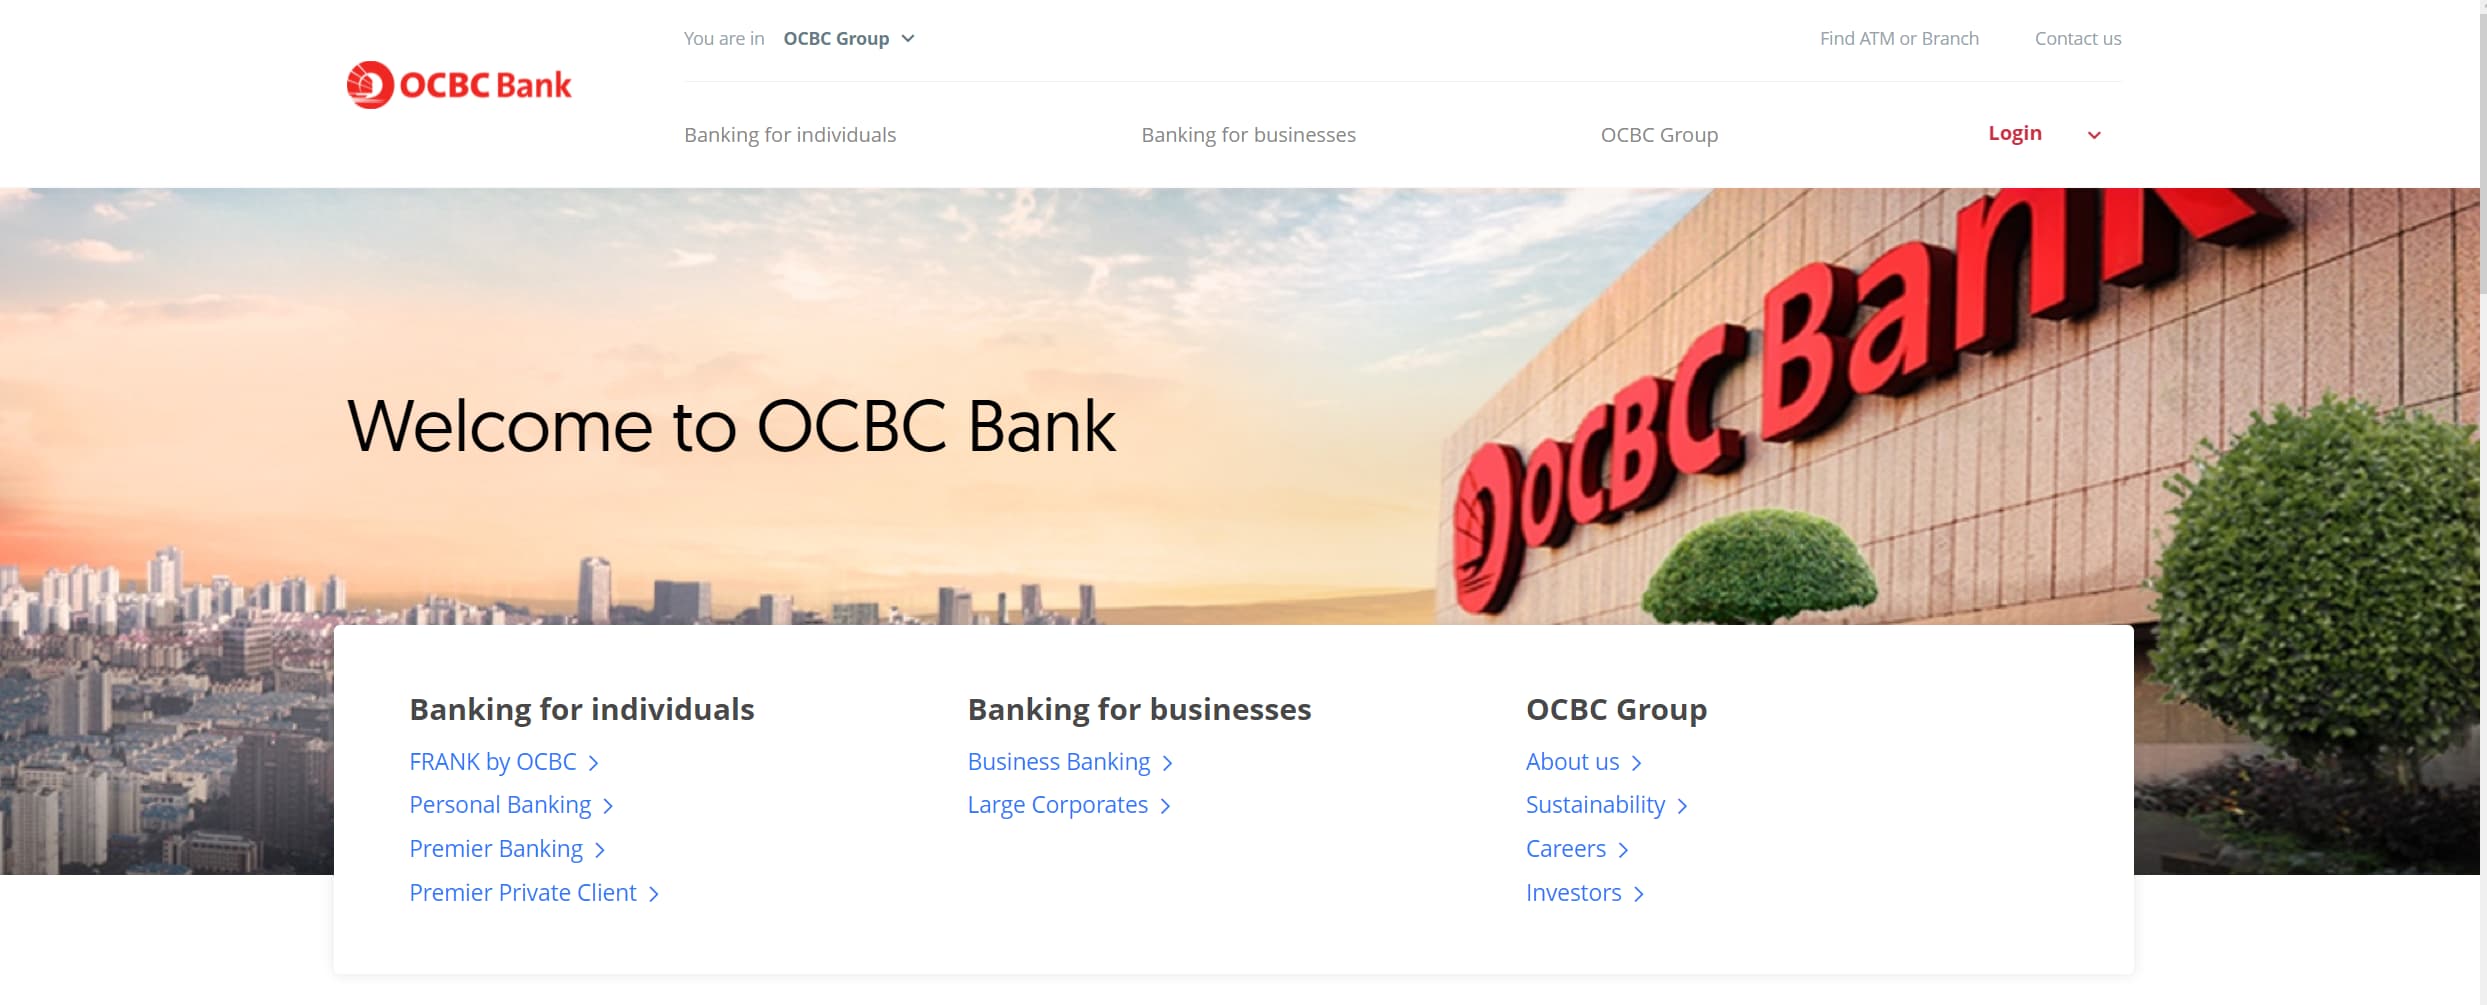 OCBC Bank Homepage